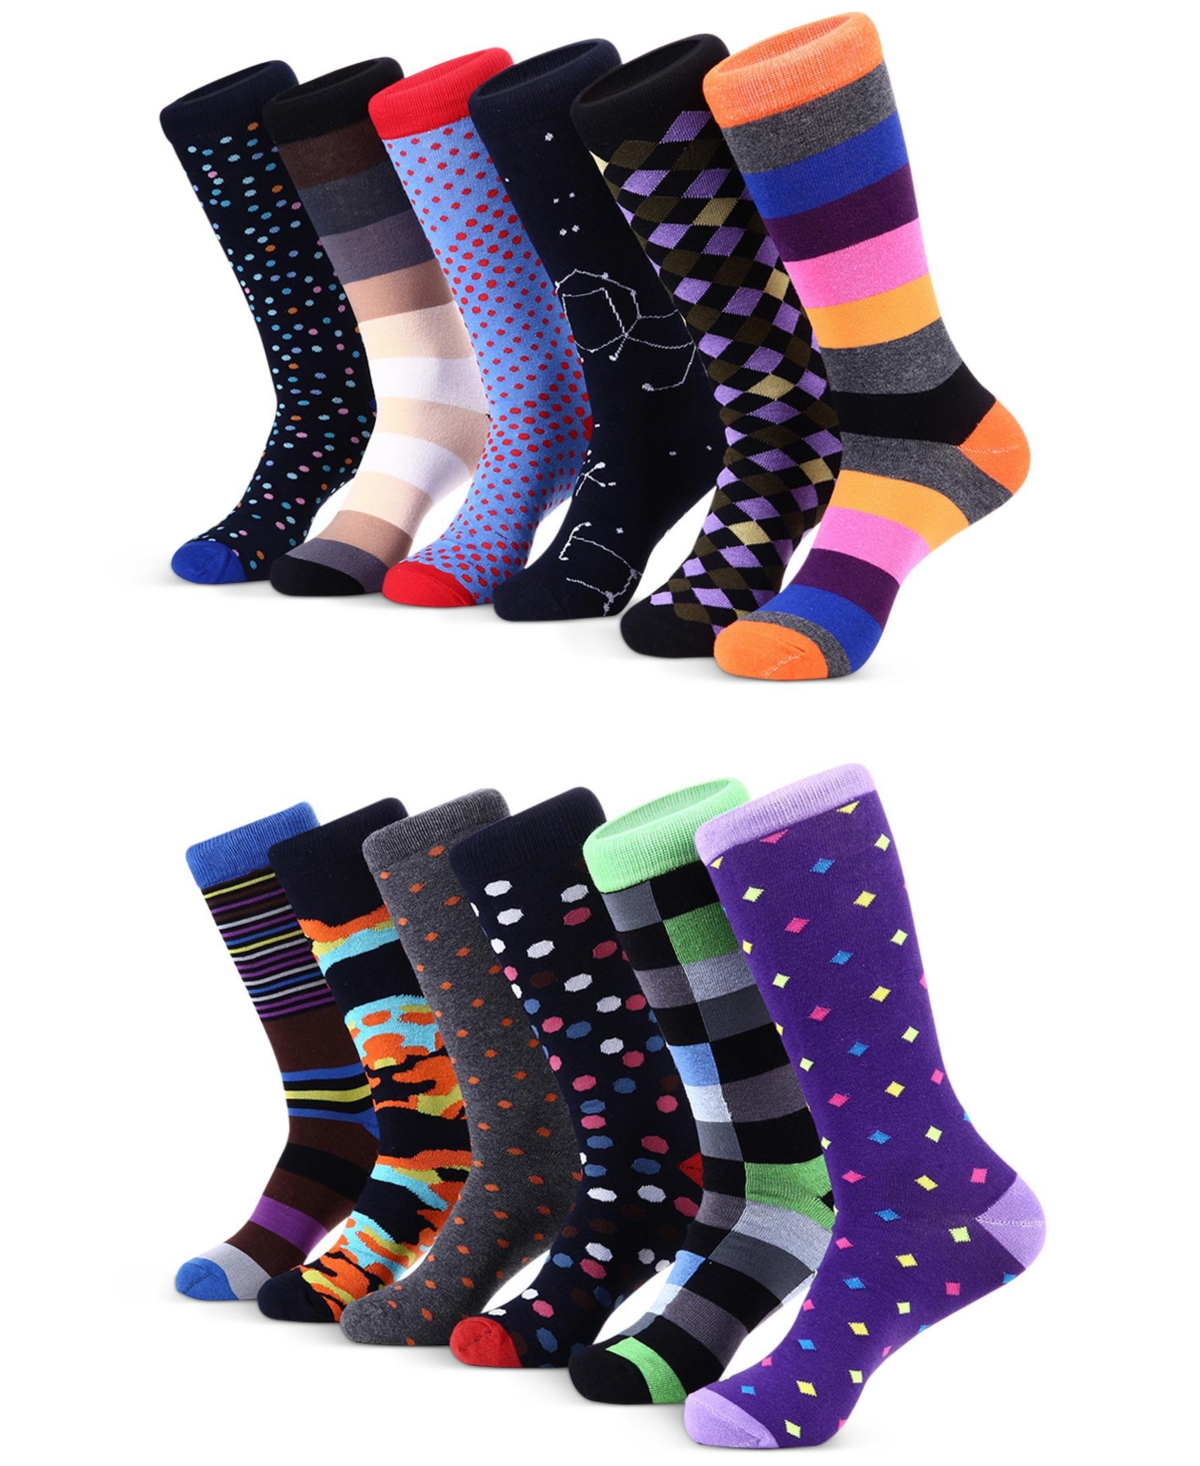 Men's Spring Zest Fun Dress Socks 12 Pack - Fun colors